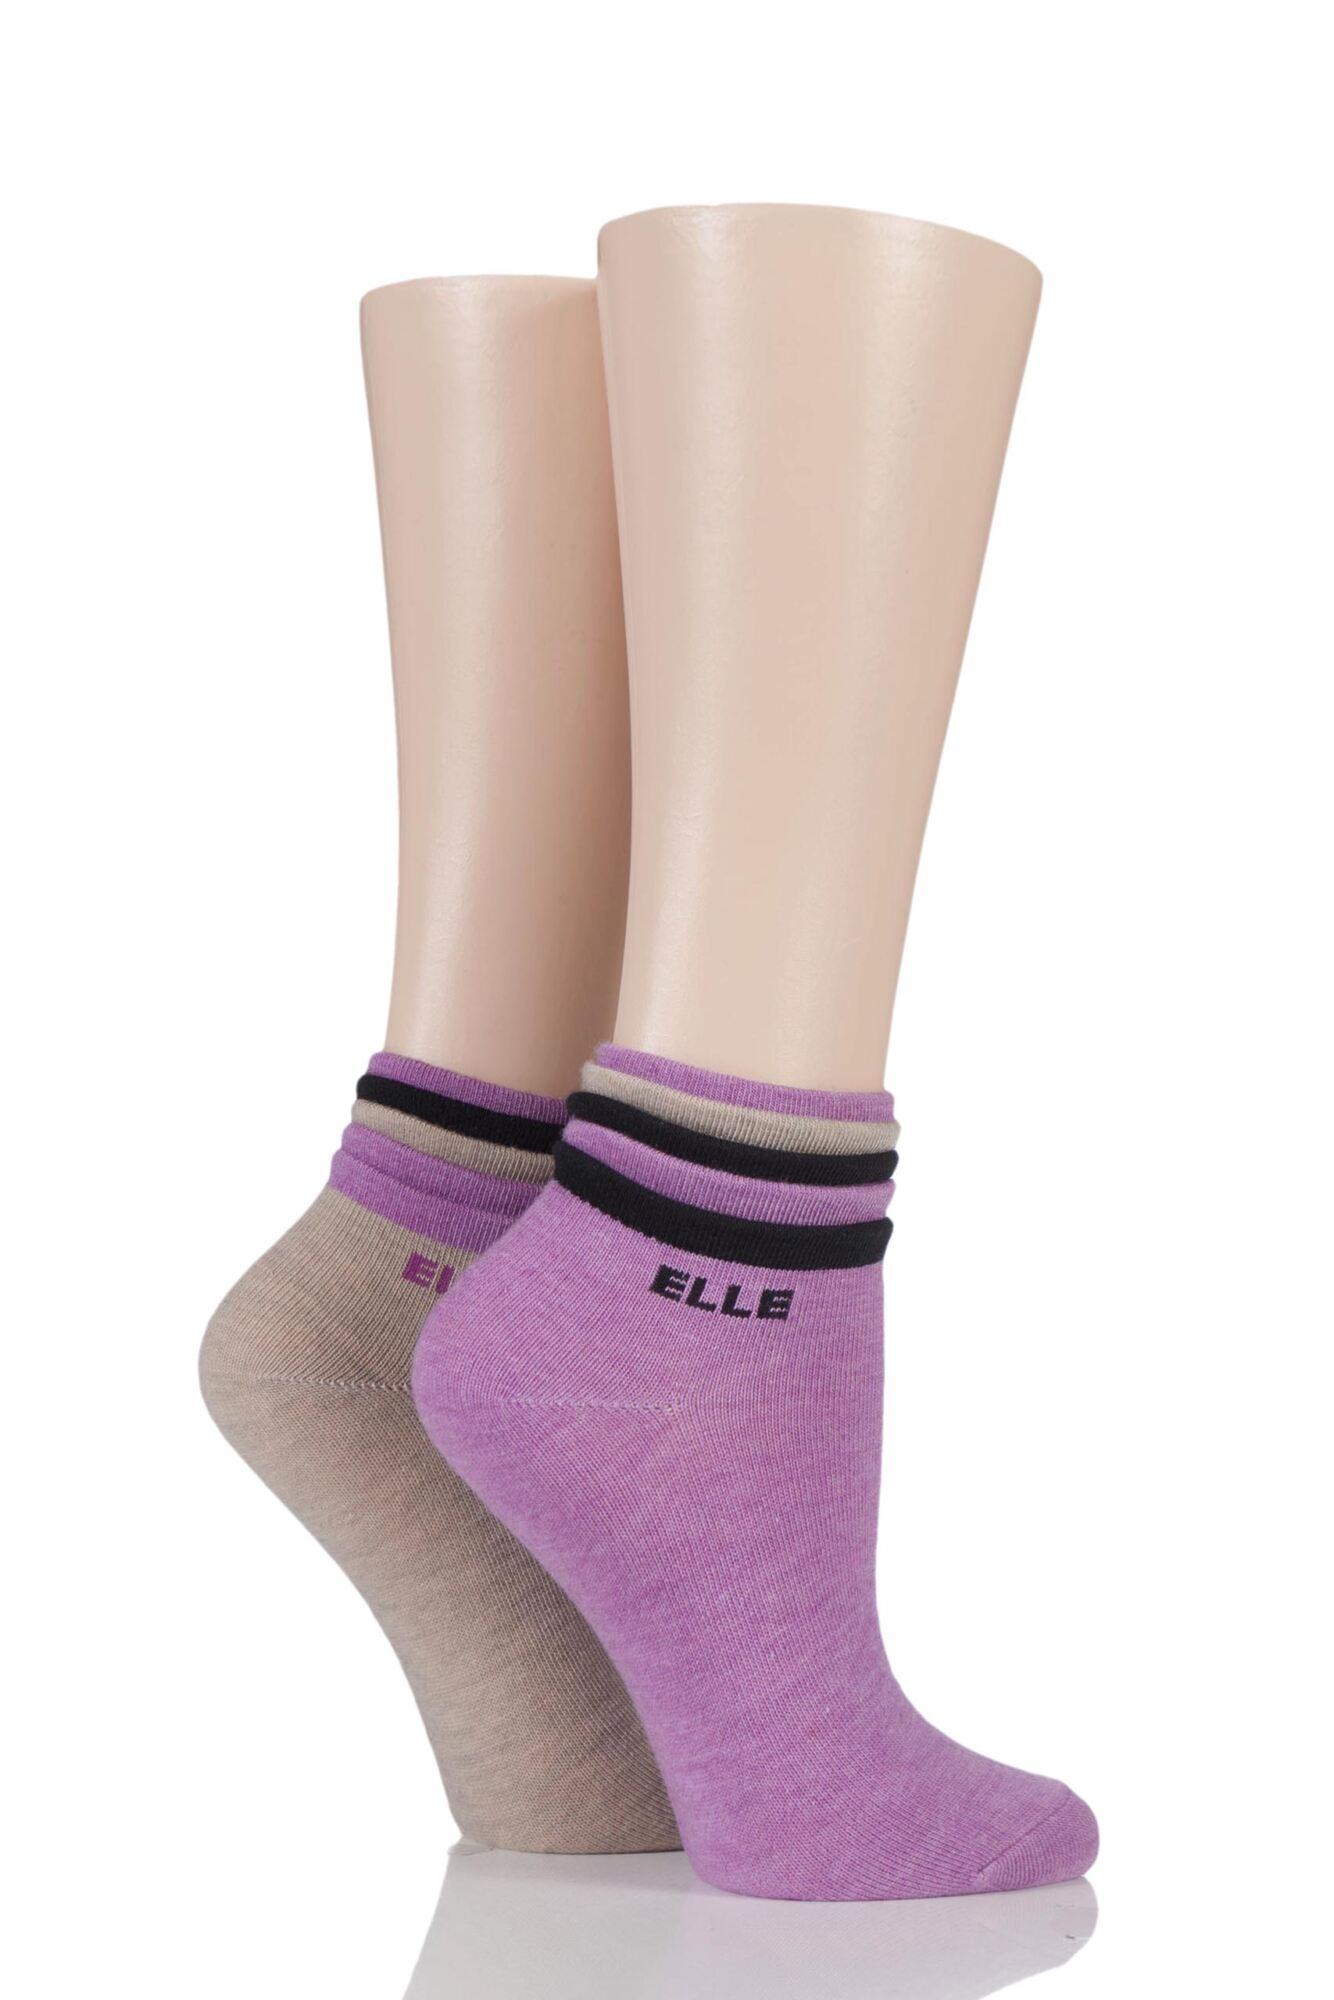 2 Pair Frilly Welt Cashmere Blend Ankle Socks Ladies - Elle